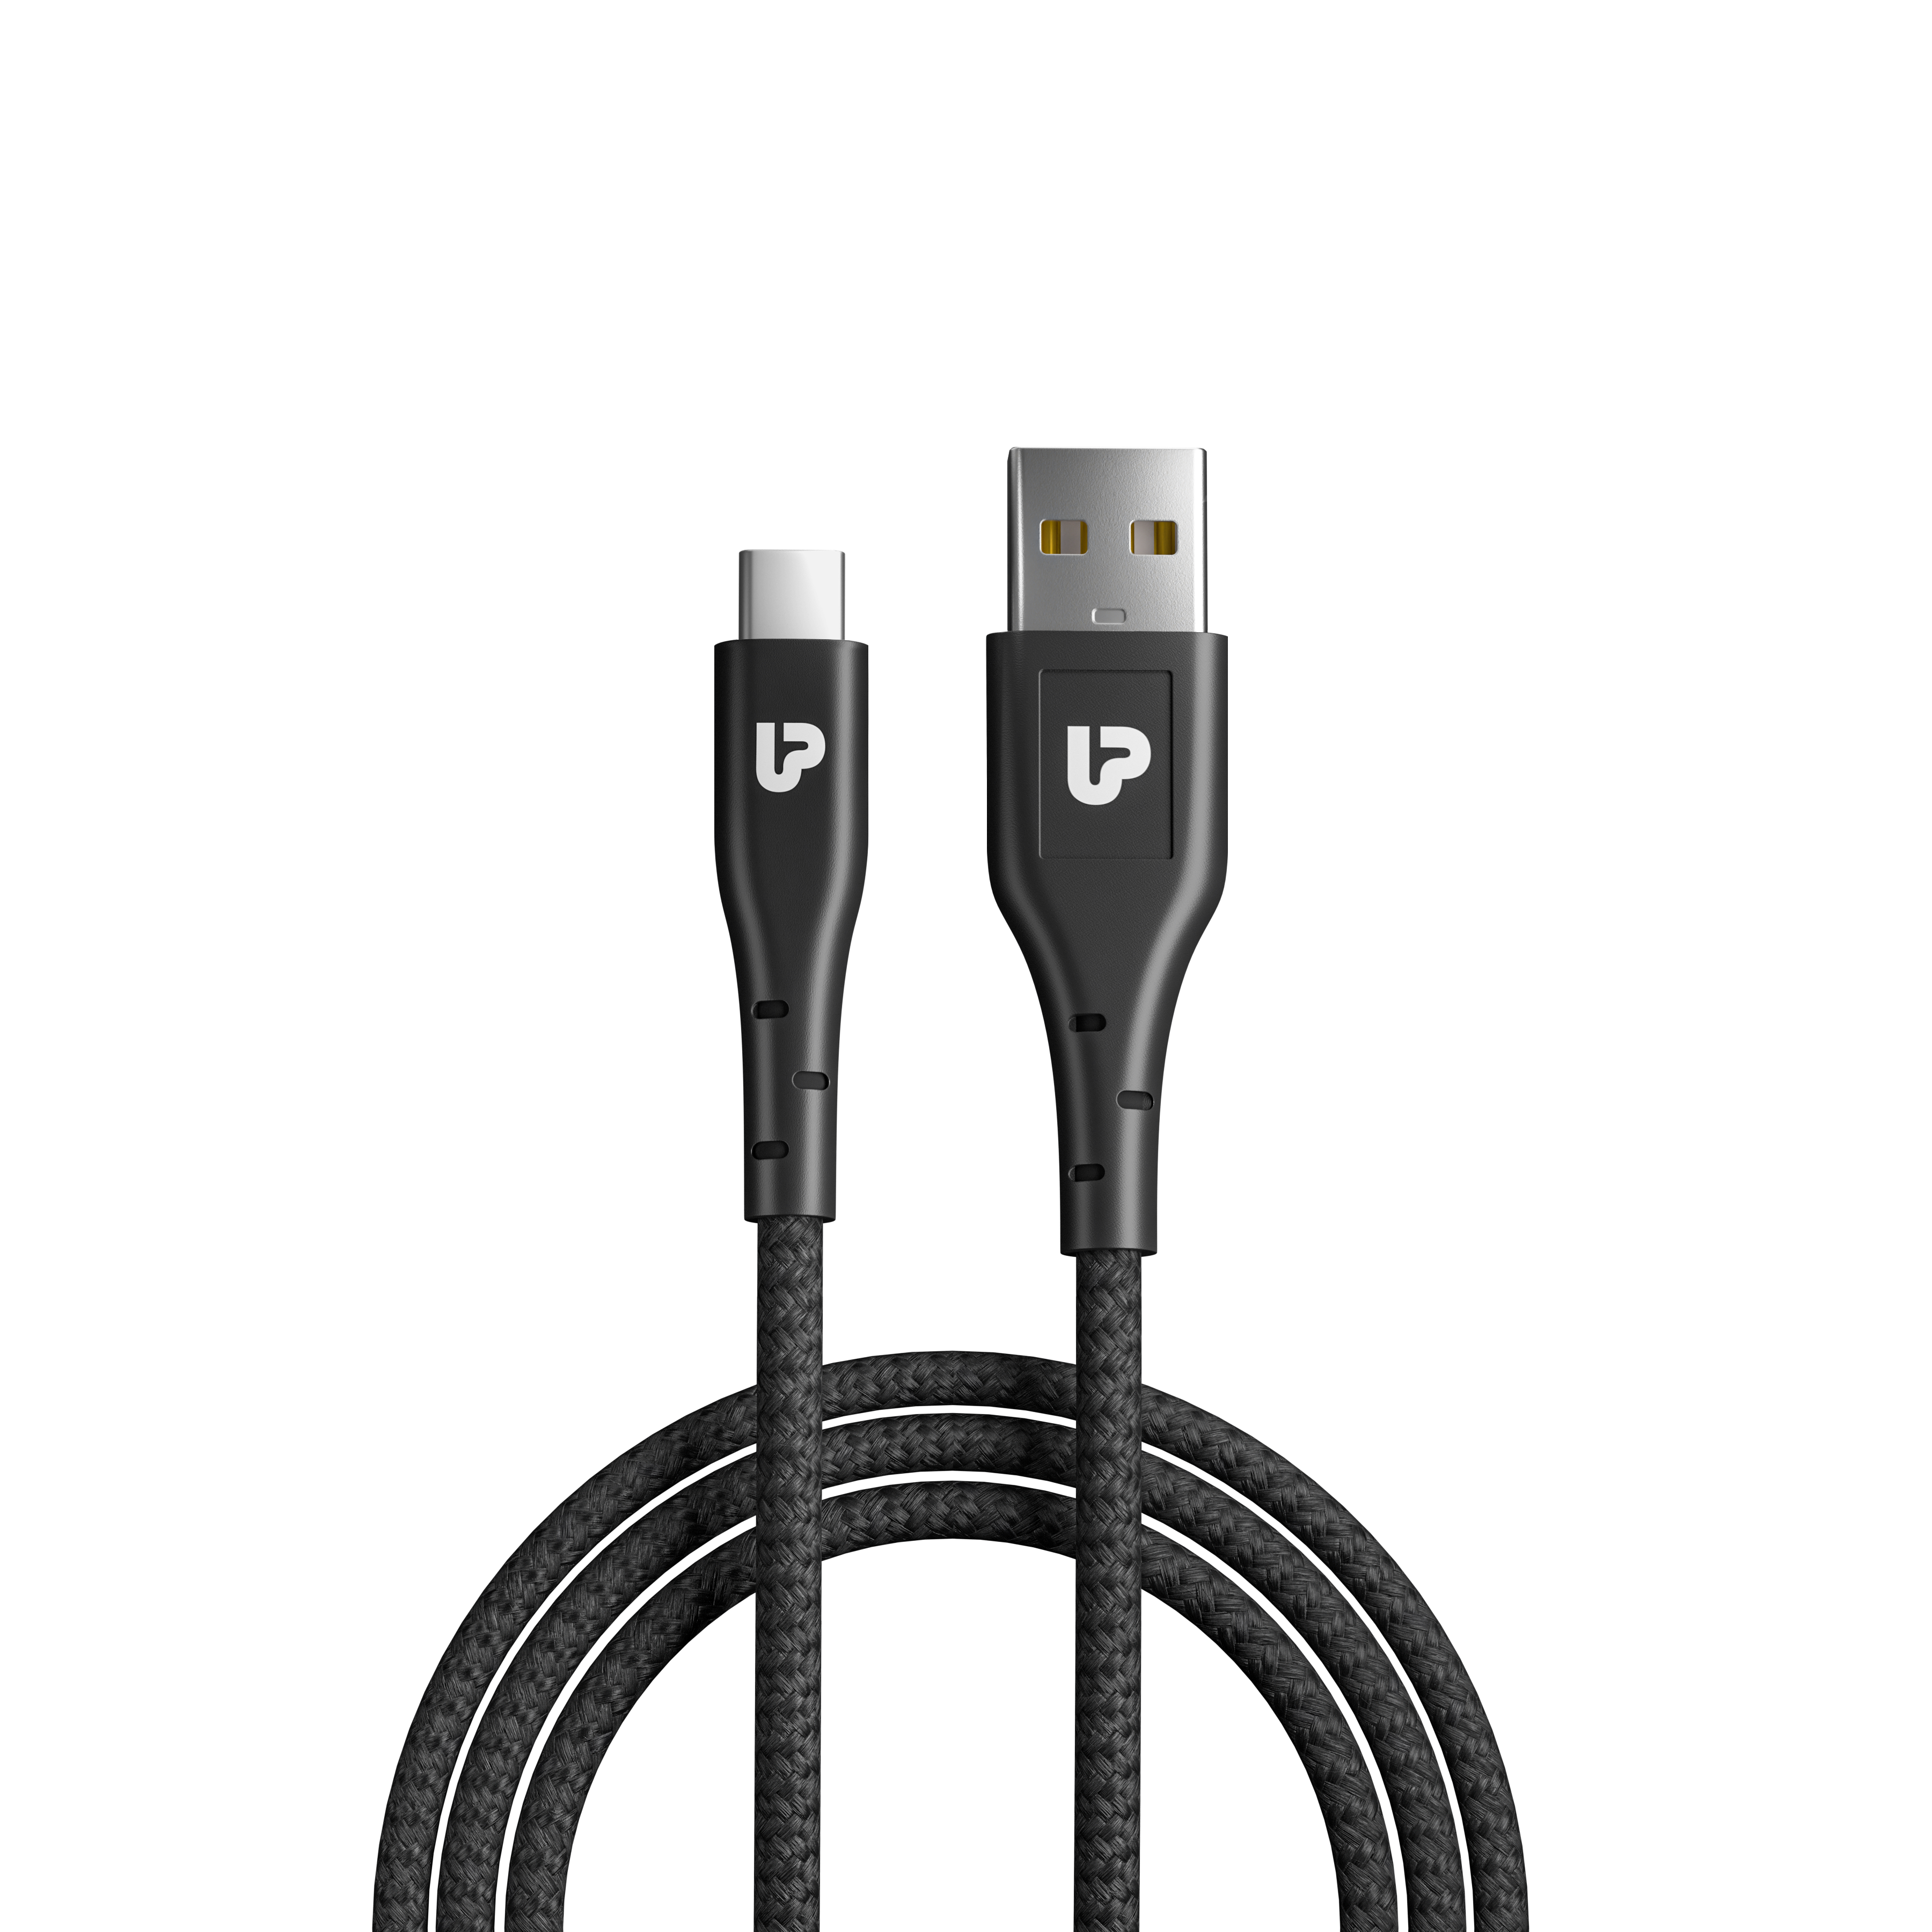 Samsung Galaxy USB-C Cable (USB-C to USB-C) - Black - US Version with  Warranty, Laptop